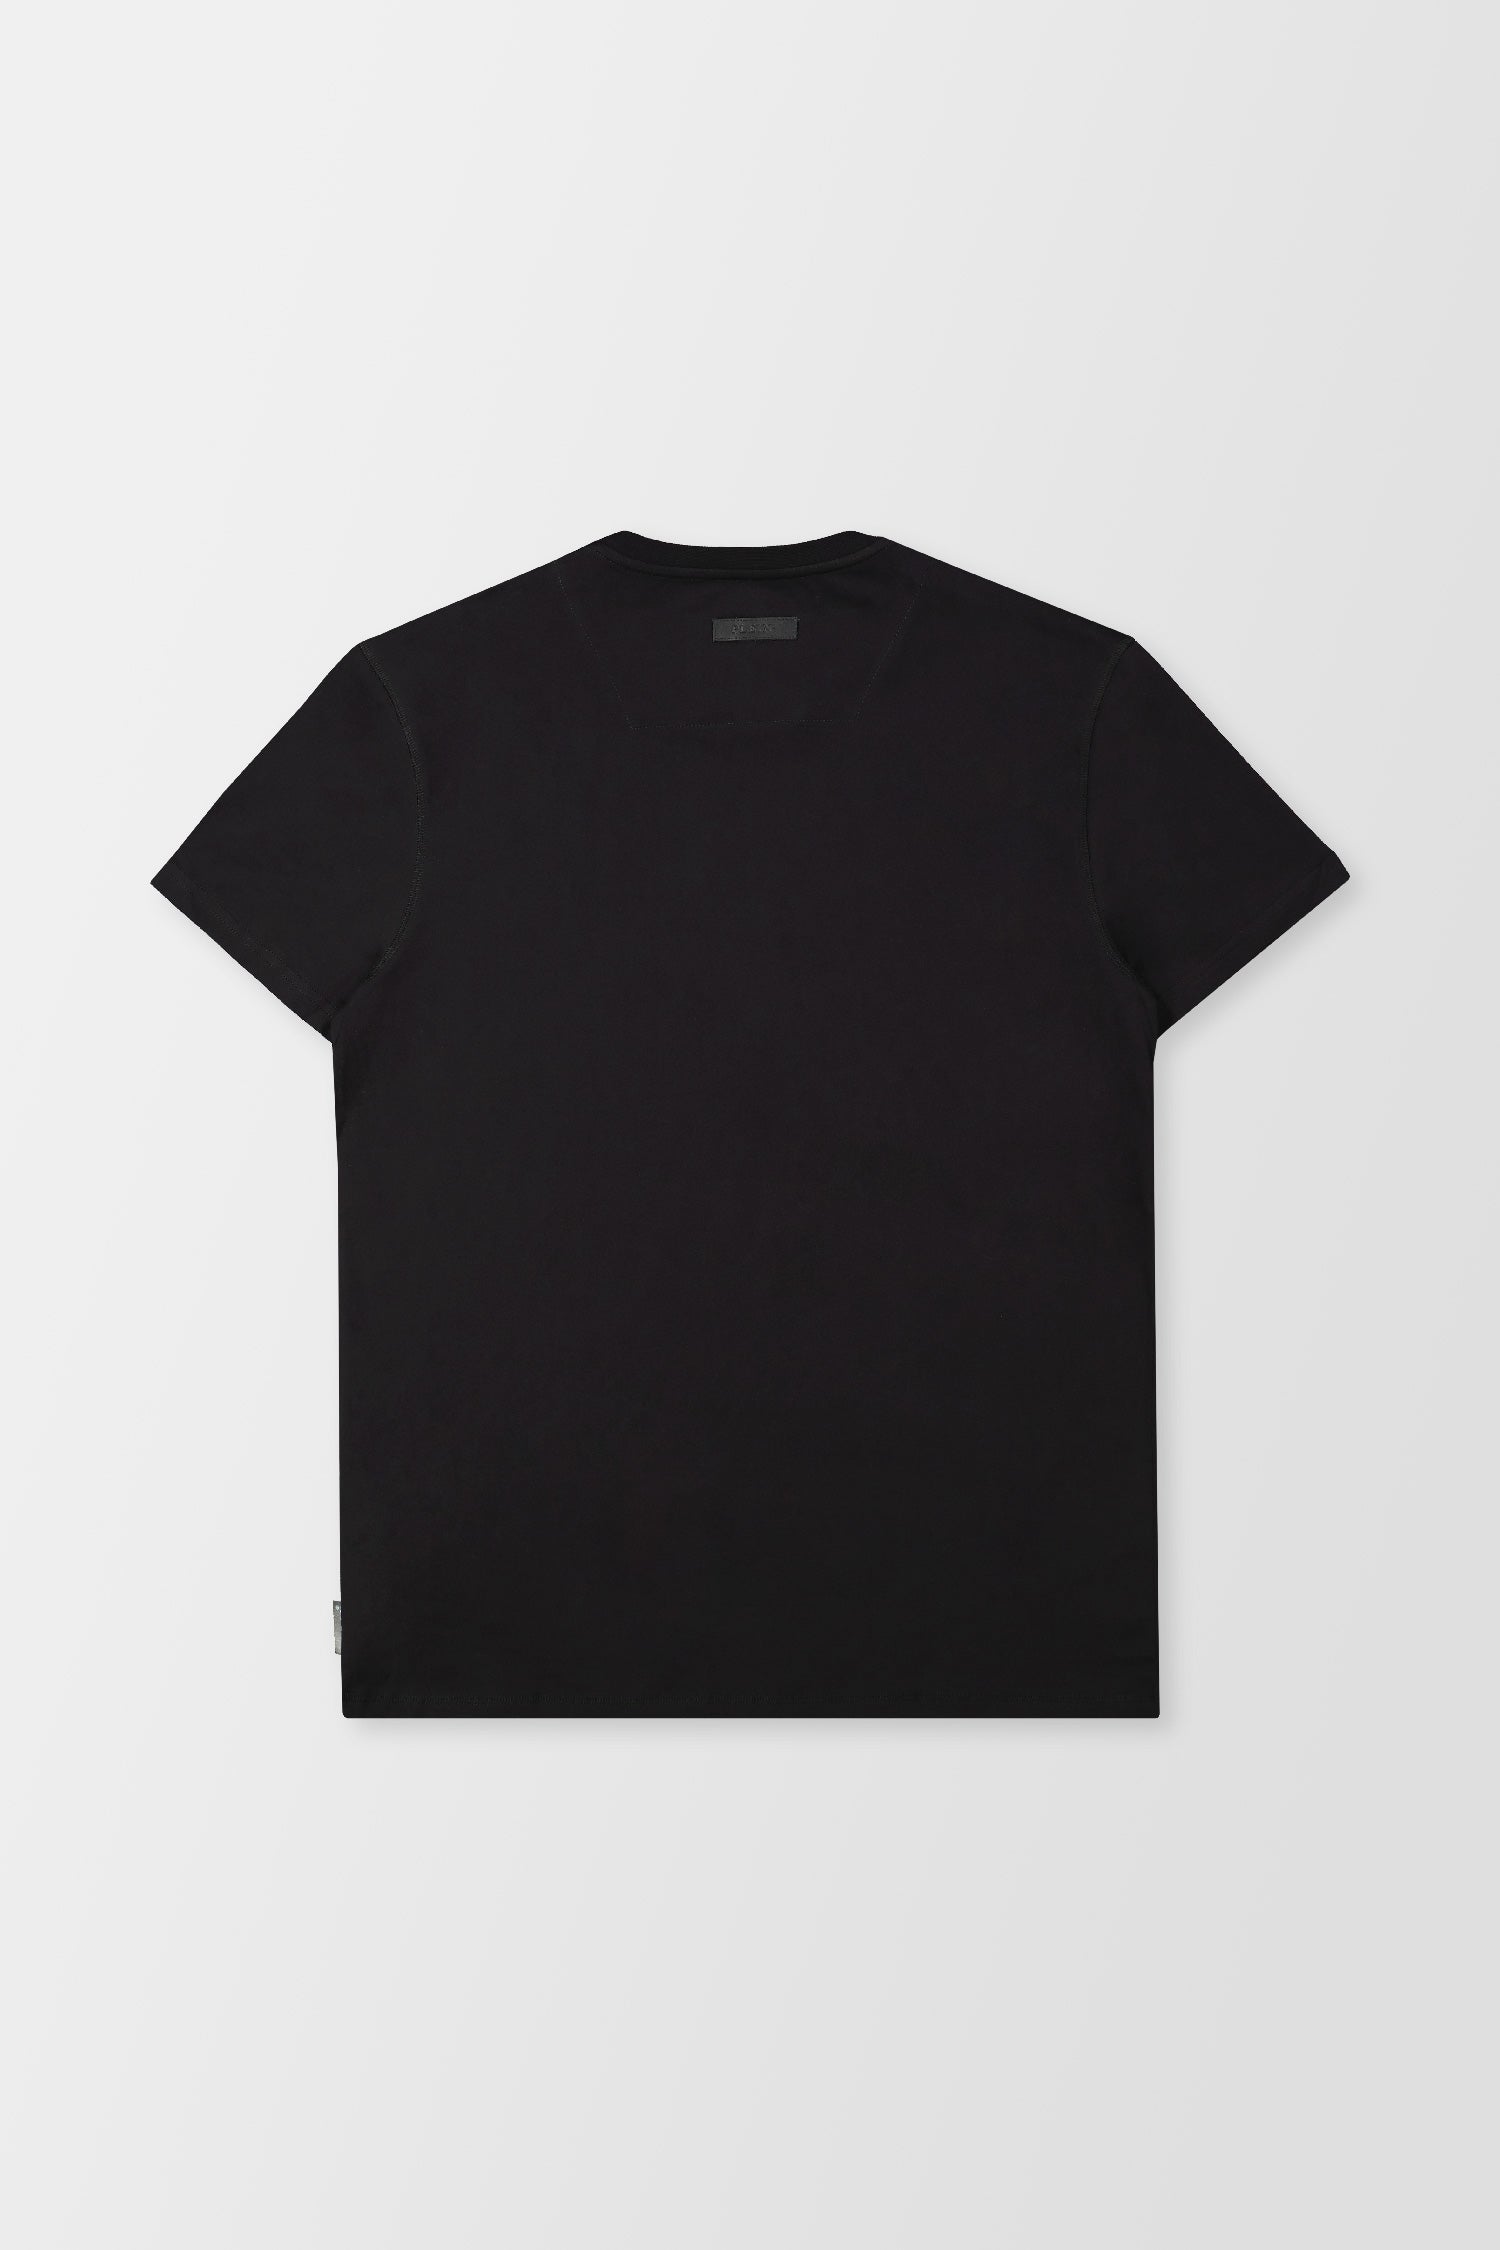 Philipp Plein Black Round Neck SS Iconic Plein T-Shirt